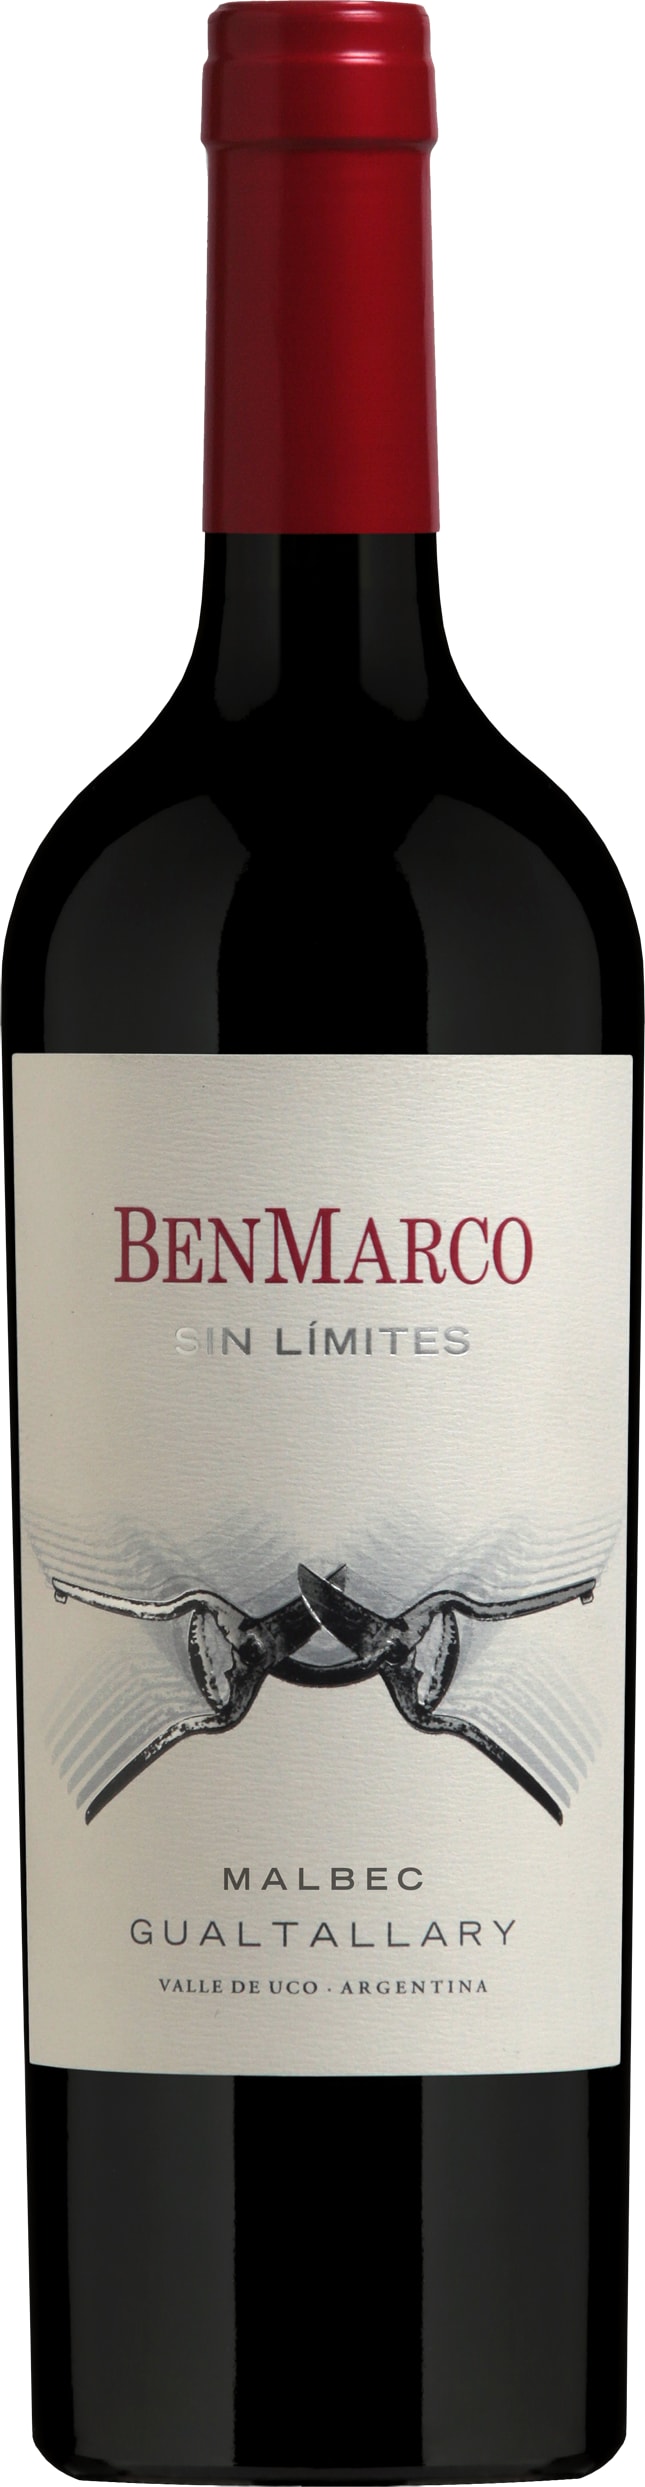 Susana Balbo BenMarco Sin Limites Malbec 2020 75cl - Buy Susana Balbo Wines from GREAT WINES DIRECT wine shop